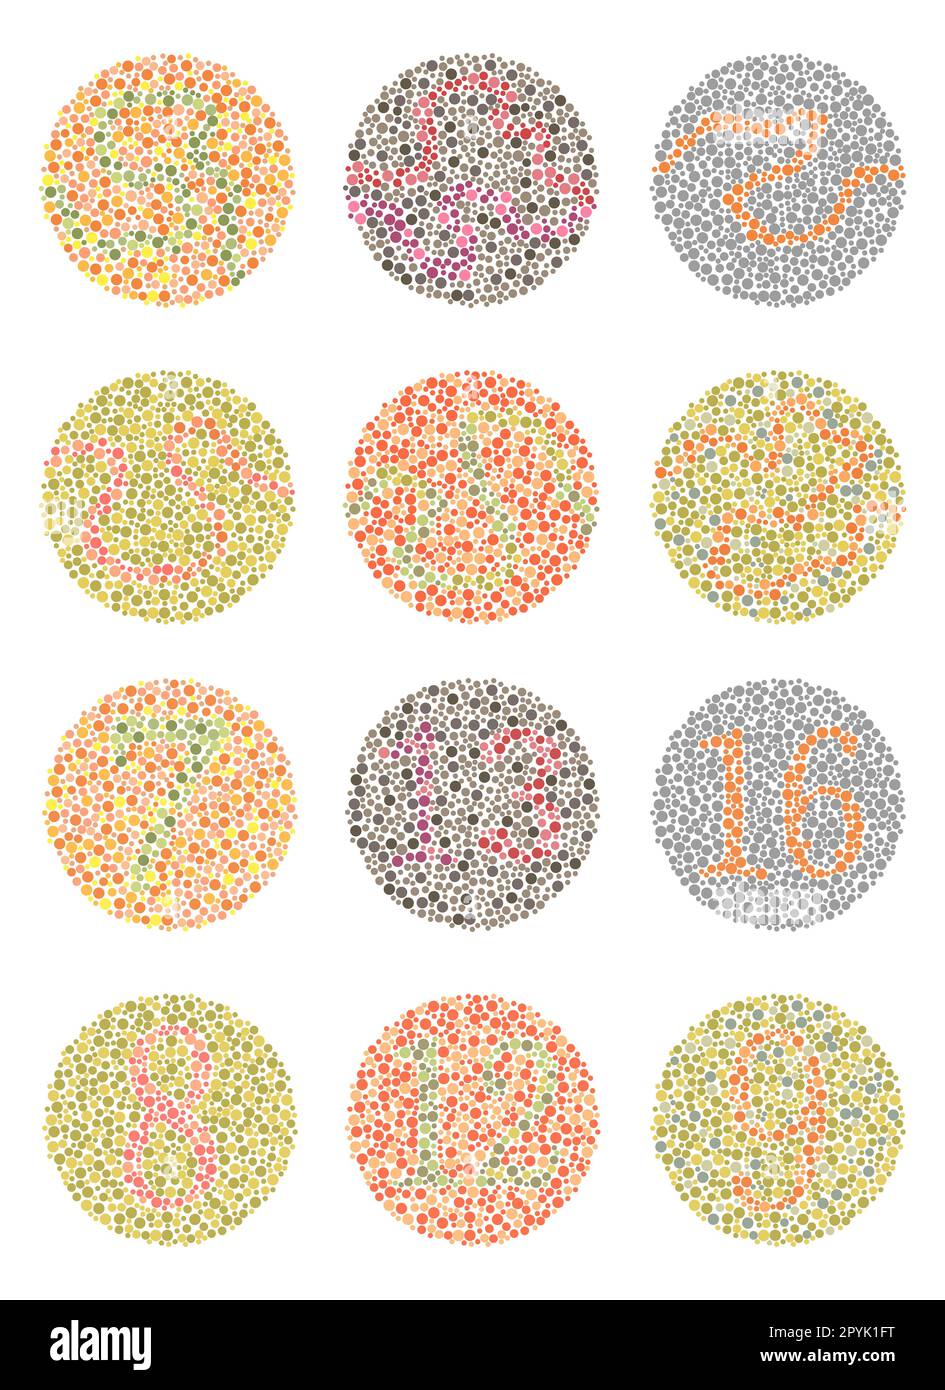 Ishihara Test daltonism,color blindness disease perception test vector illustartion Stock Photo